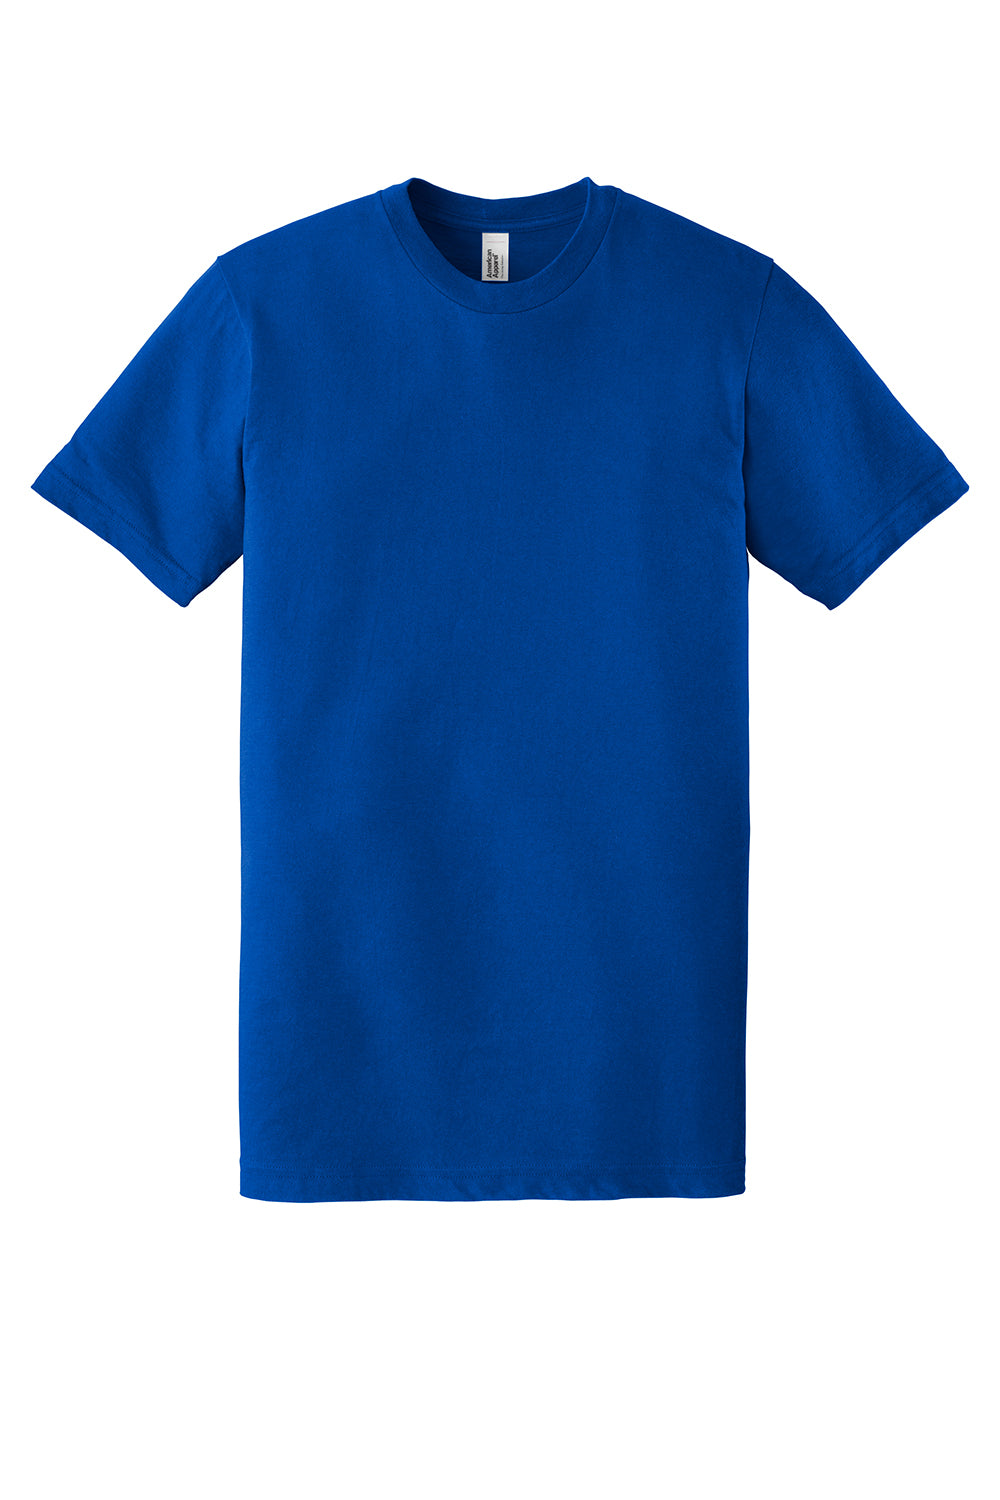 American Apparel 2001 Mens Fine Jersey Short Sleeve Crewneck T-Shirt Royal Blue Flat Front